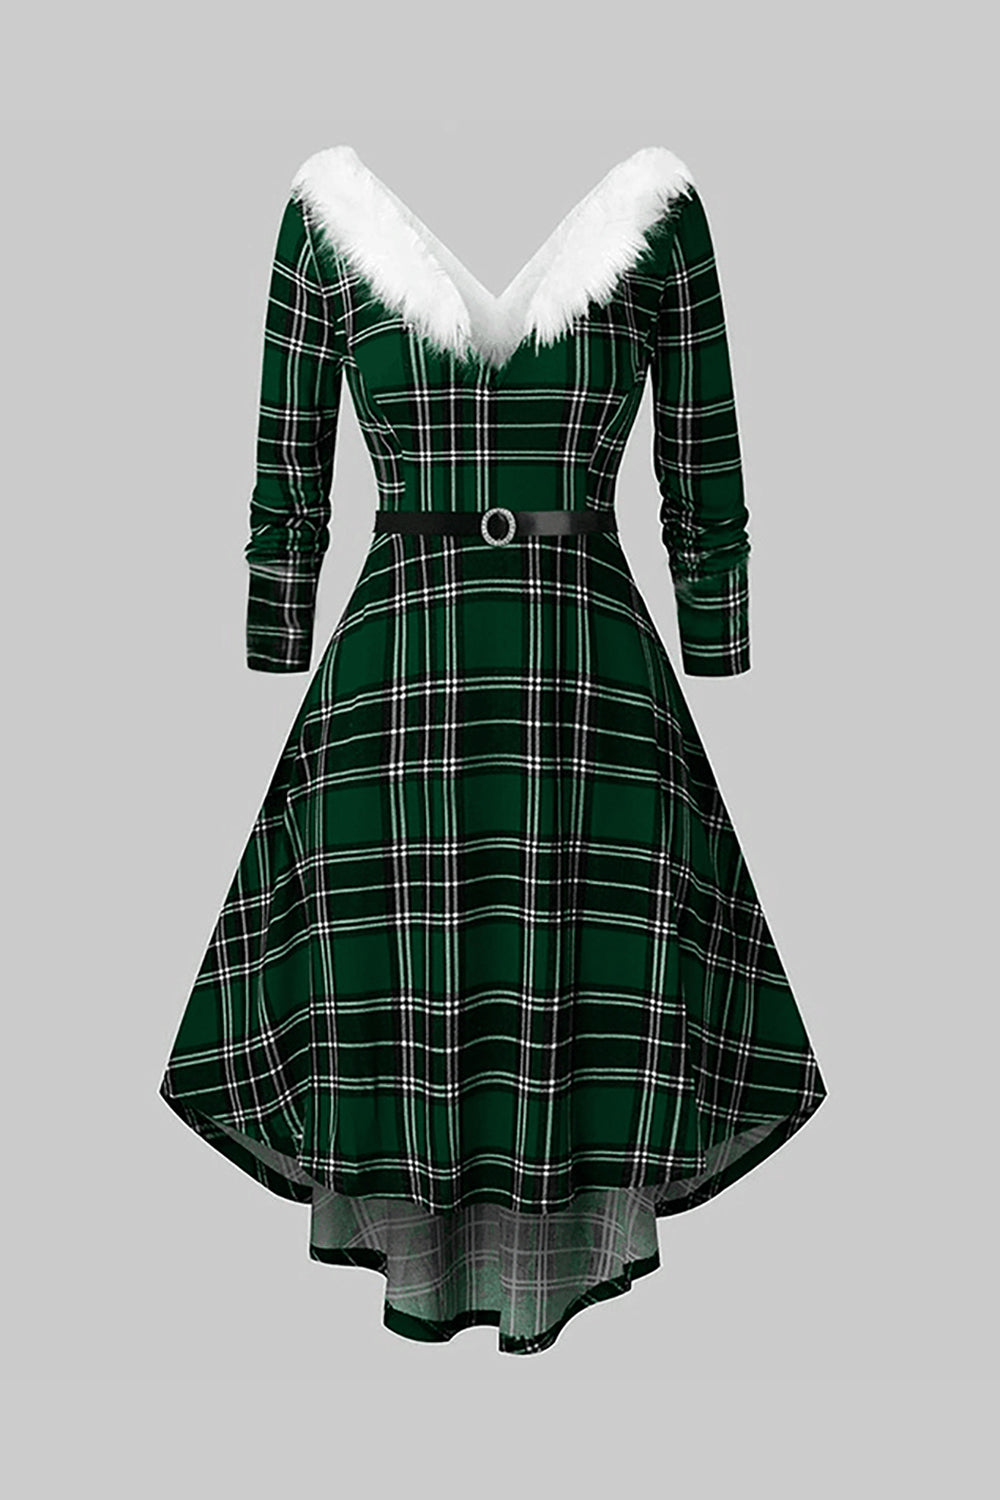 V Neck Green Plaid Christmas Dress with Fur Collar